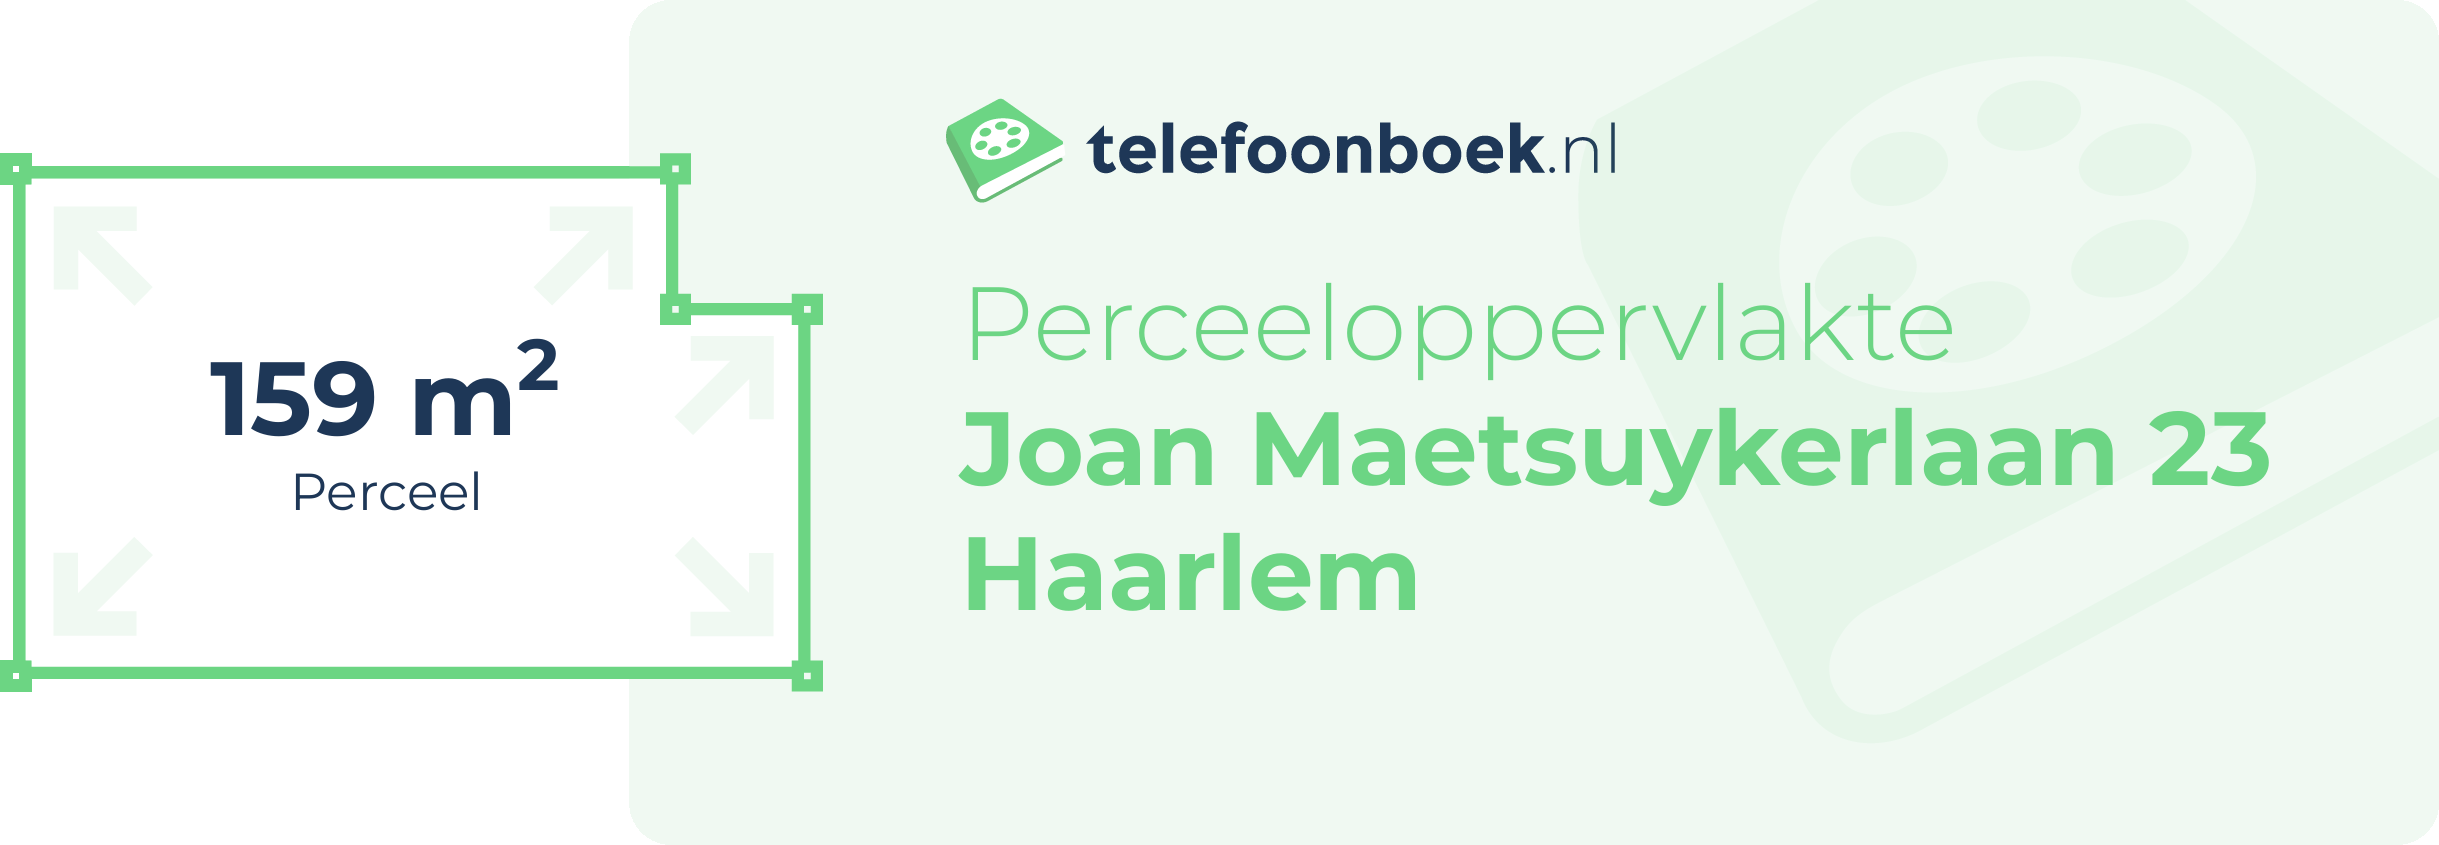 Perceeloppervlakte Joan Maetsuykerlaan 23 Haarlem